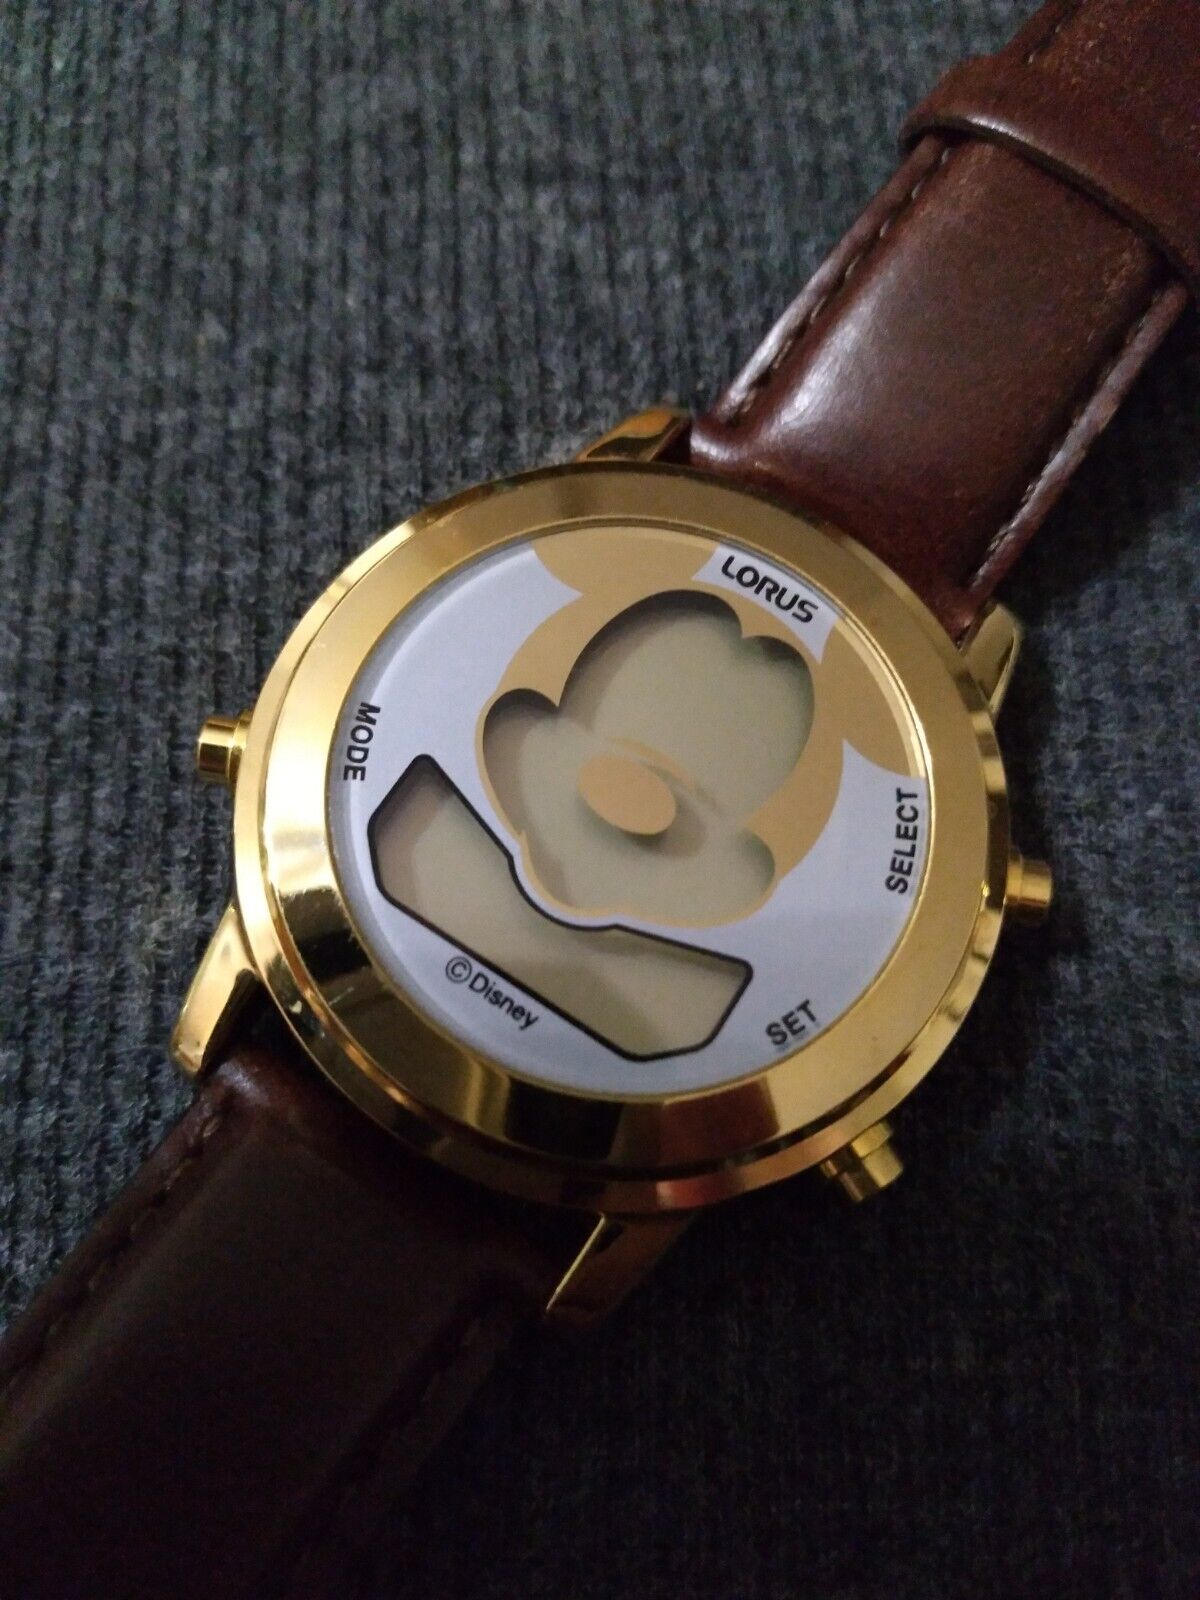 Vintage Lorus Seiko - Winking Mickey Mouse Digital Watch (Never Worn)